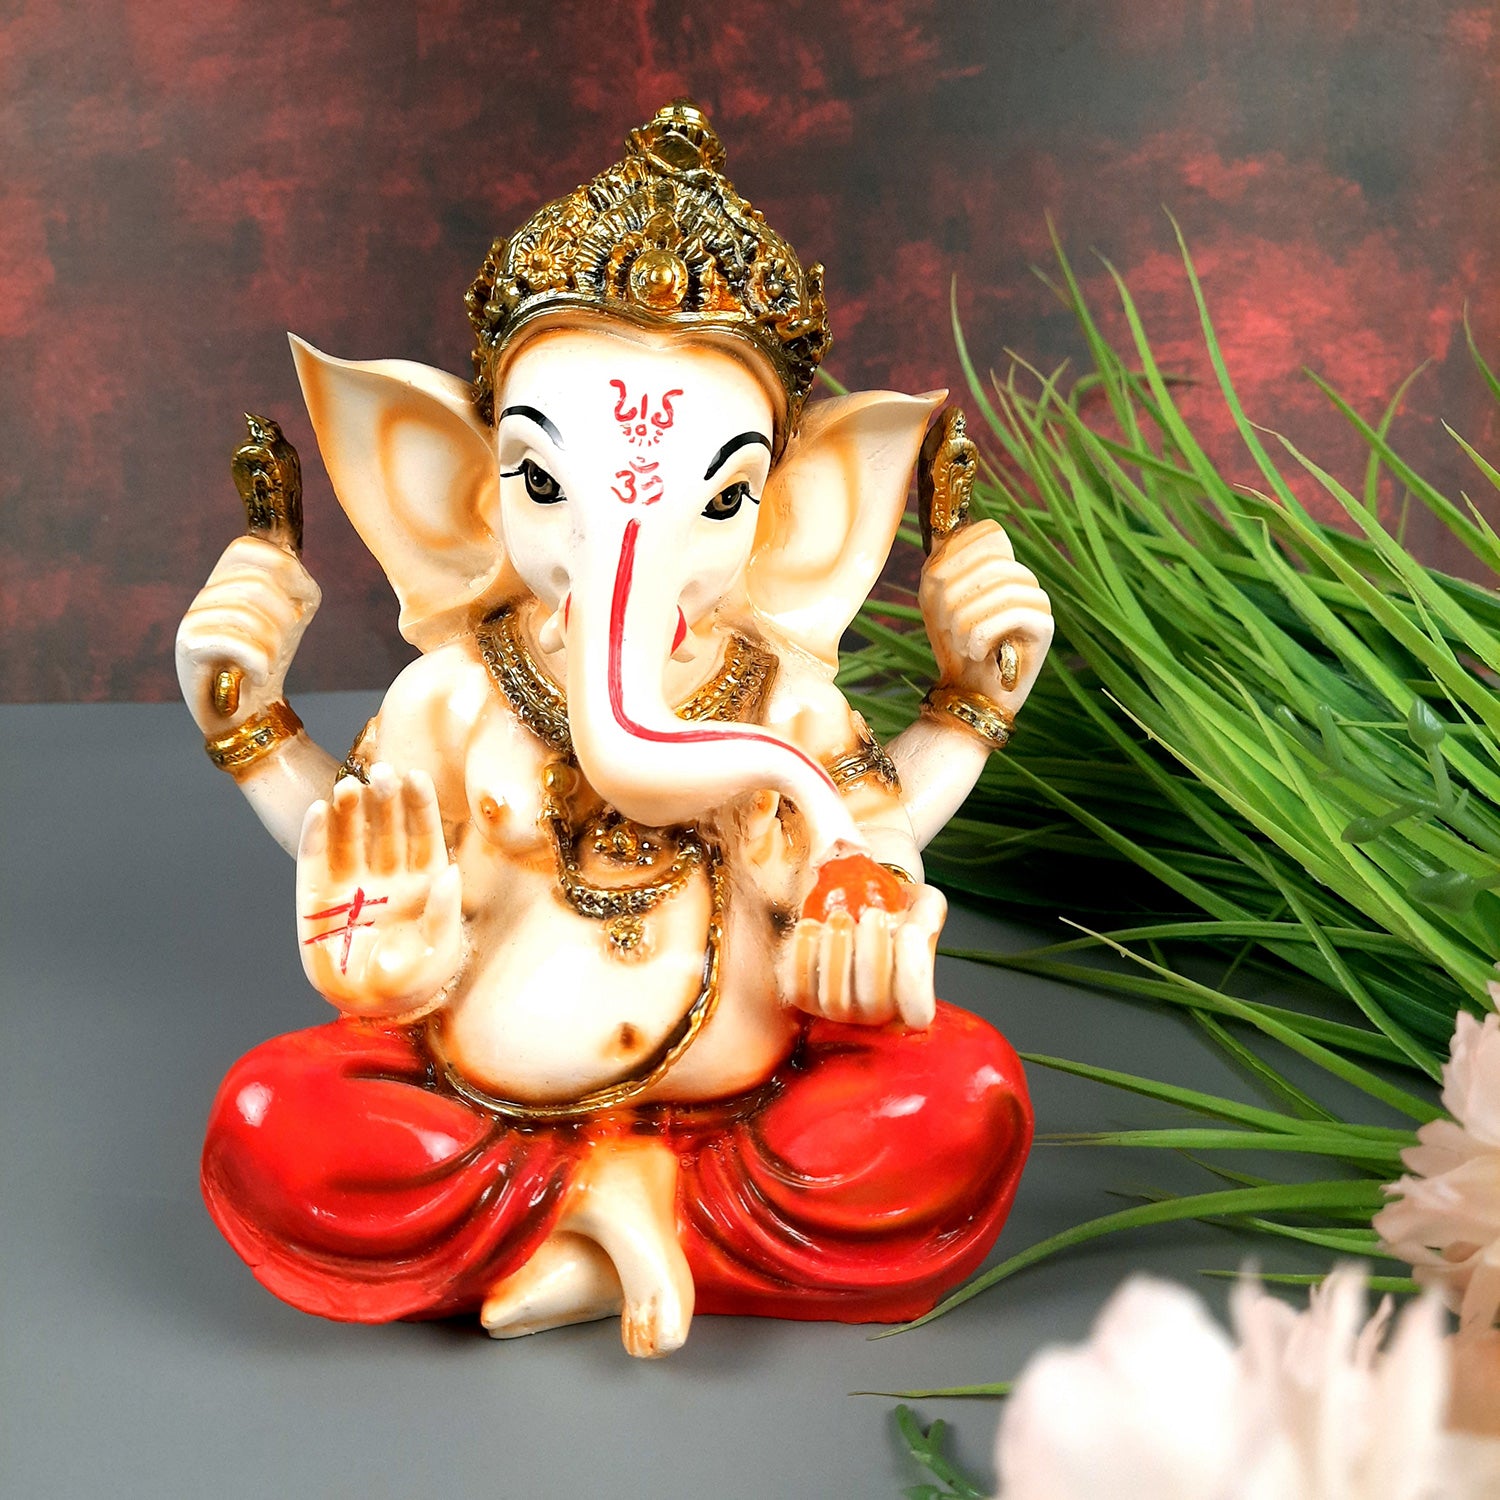 Ganesh Idol | Lord Ganesha Statue Murti - For Puja, Home & Entrance Living Room Decor & Gift - 8 Inch  - Apkamart